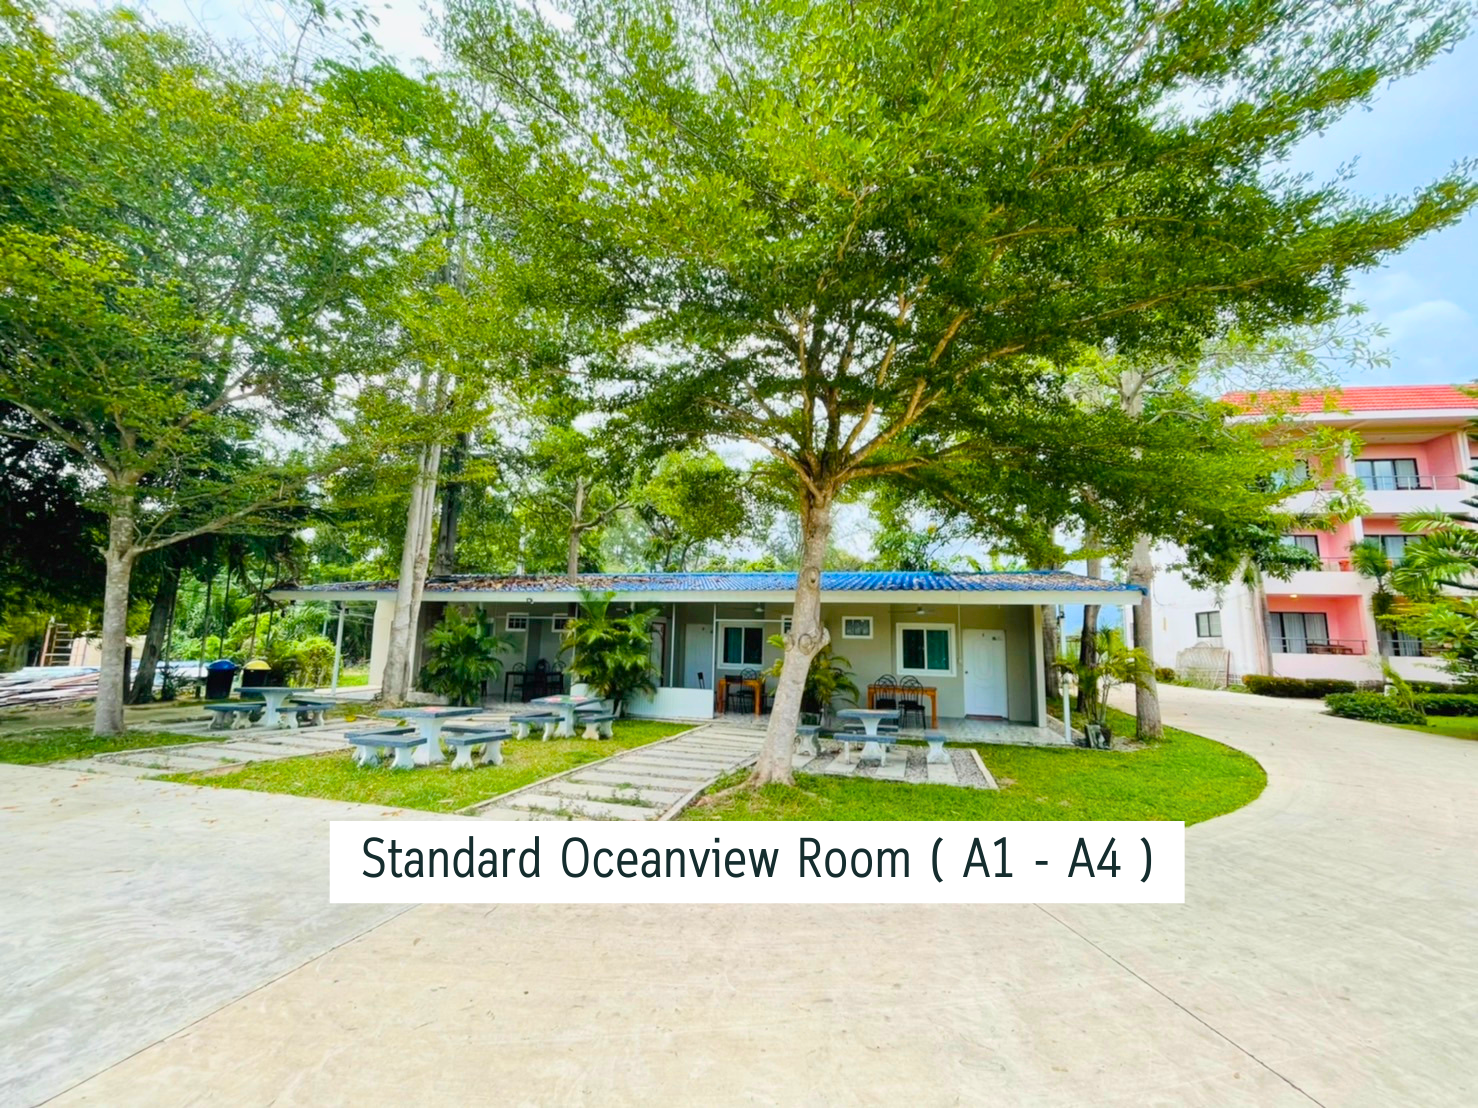 Standard Oceanview Room ( A1 - A3 )